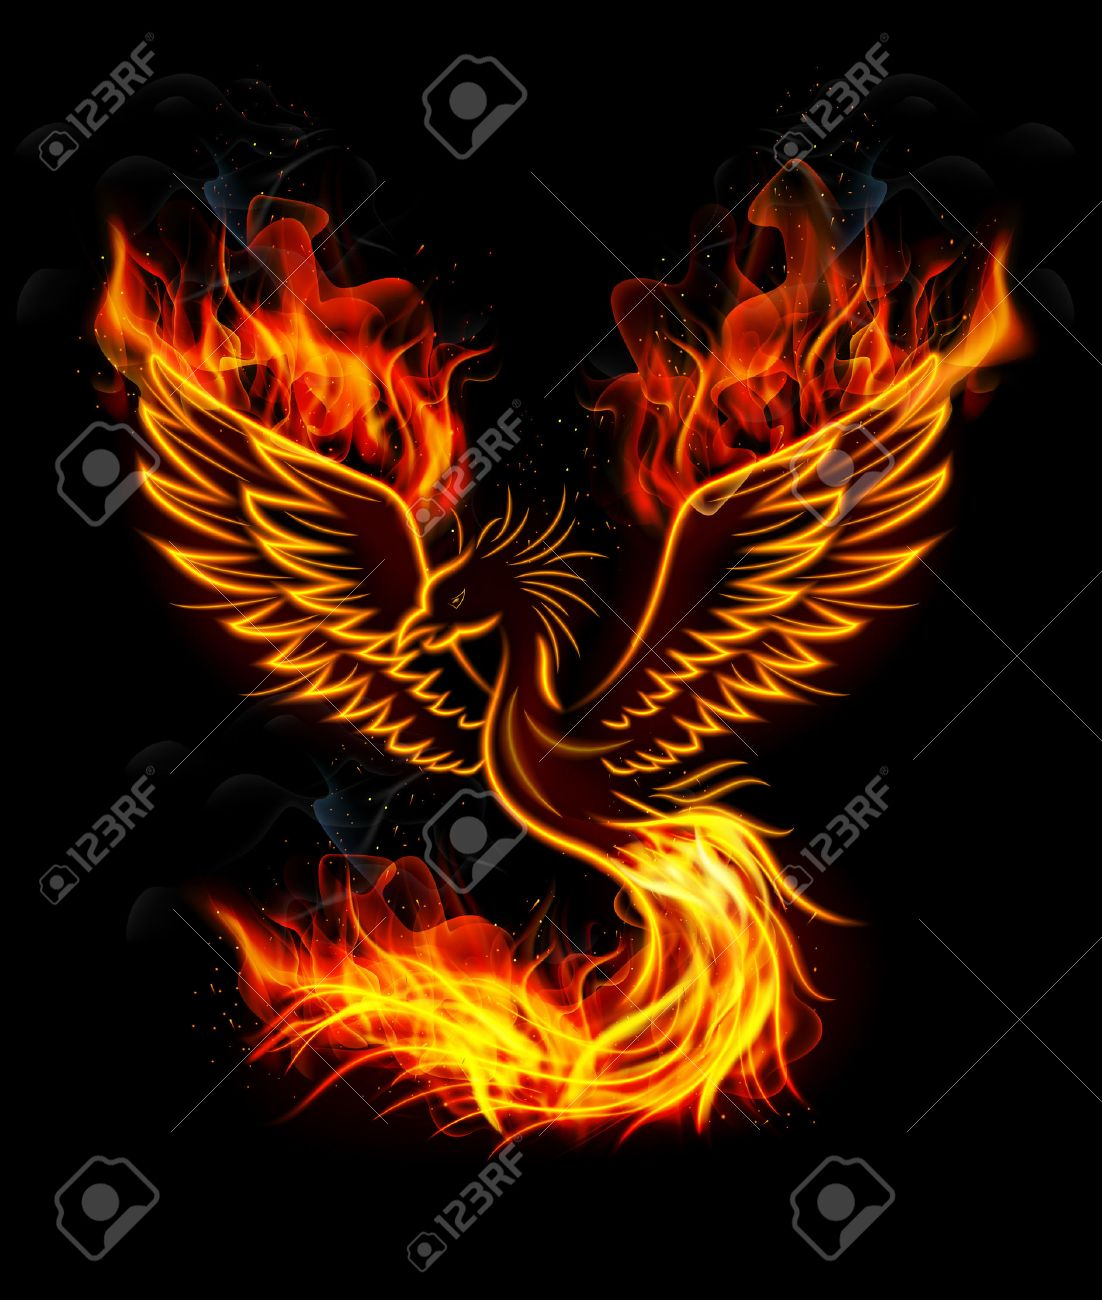 illustration of fire burning phoenix bird with black background